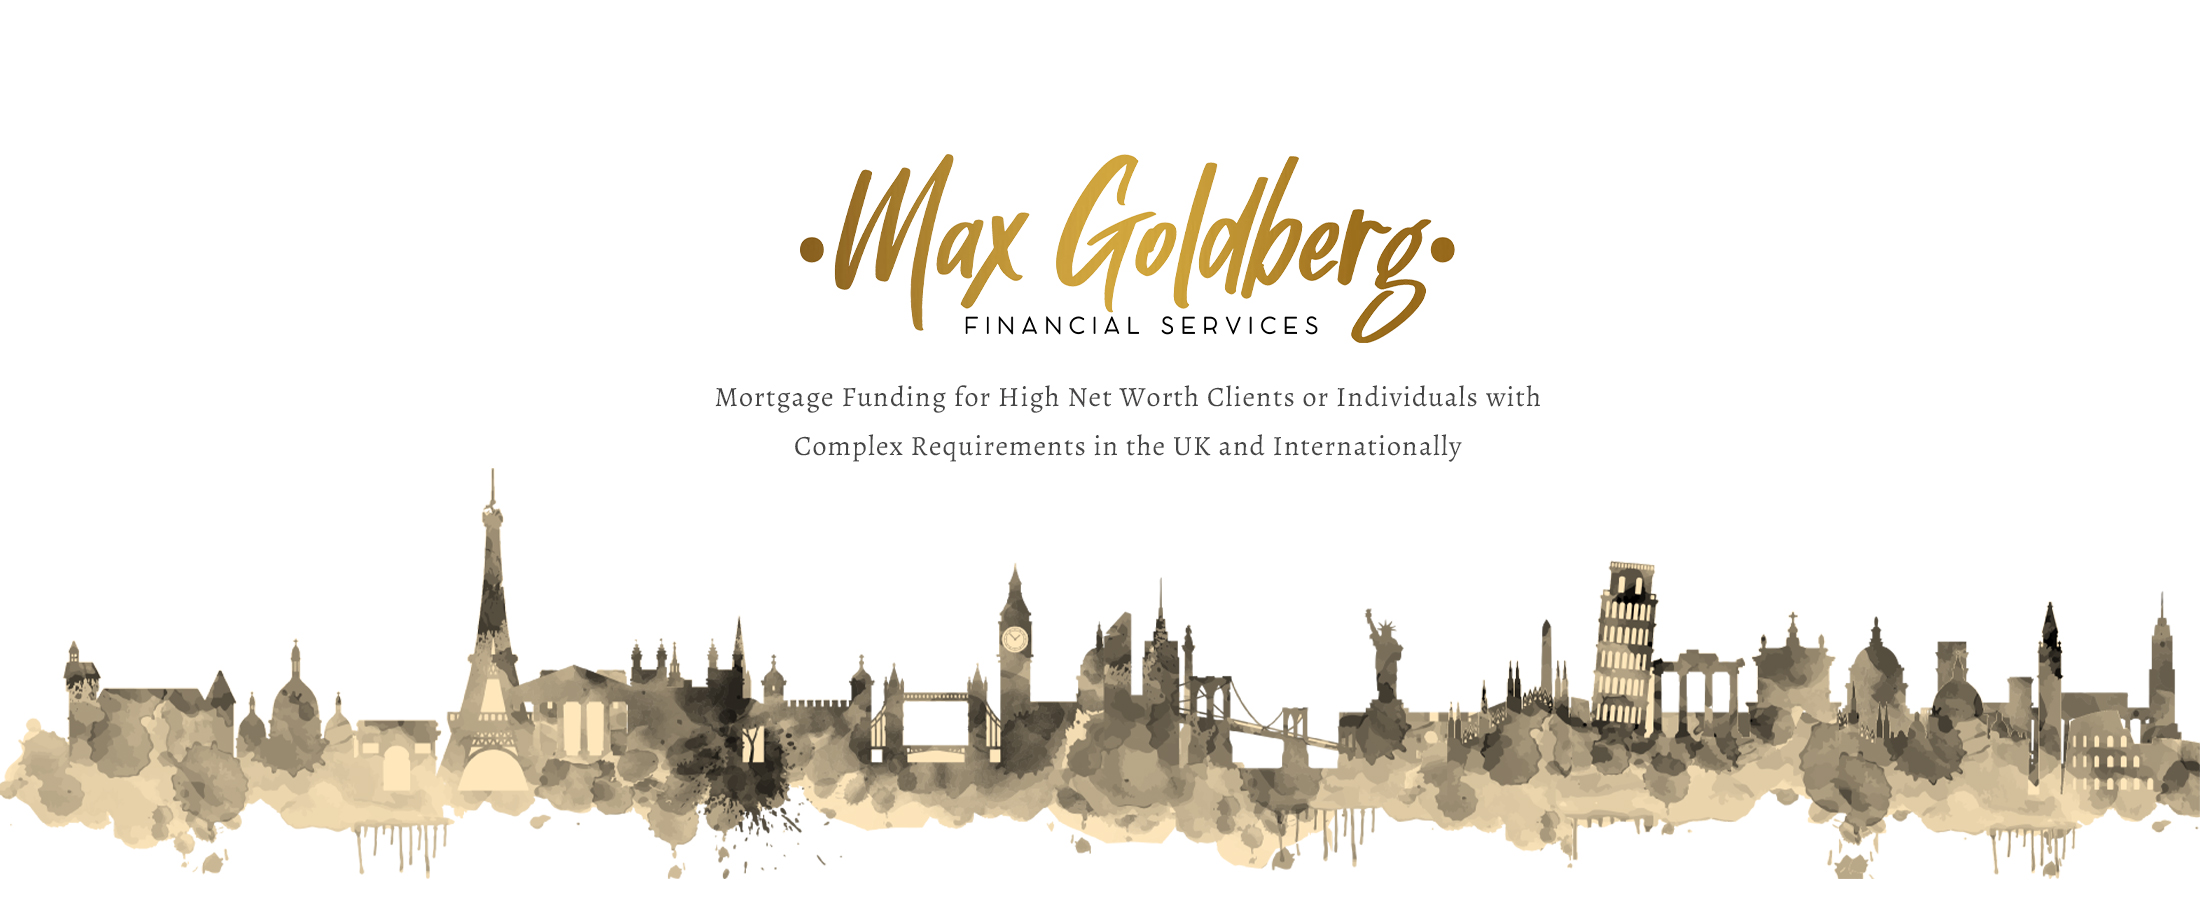 Max-Goldberg-Financial-Services-Ltd-banner